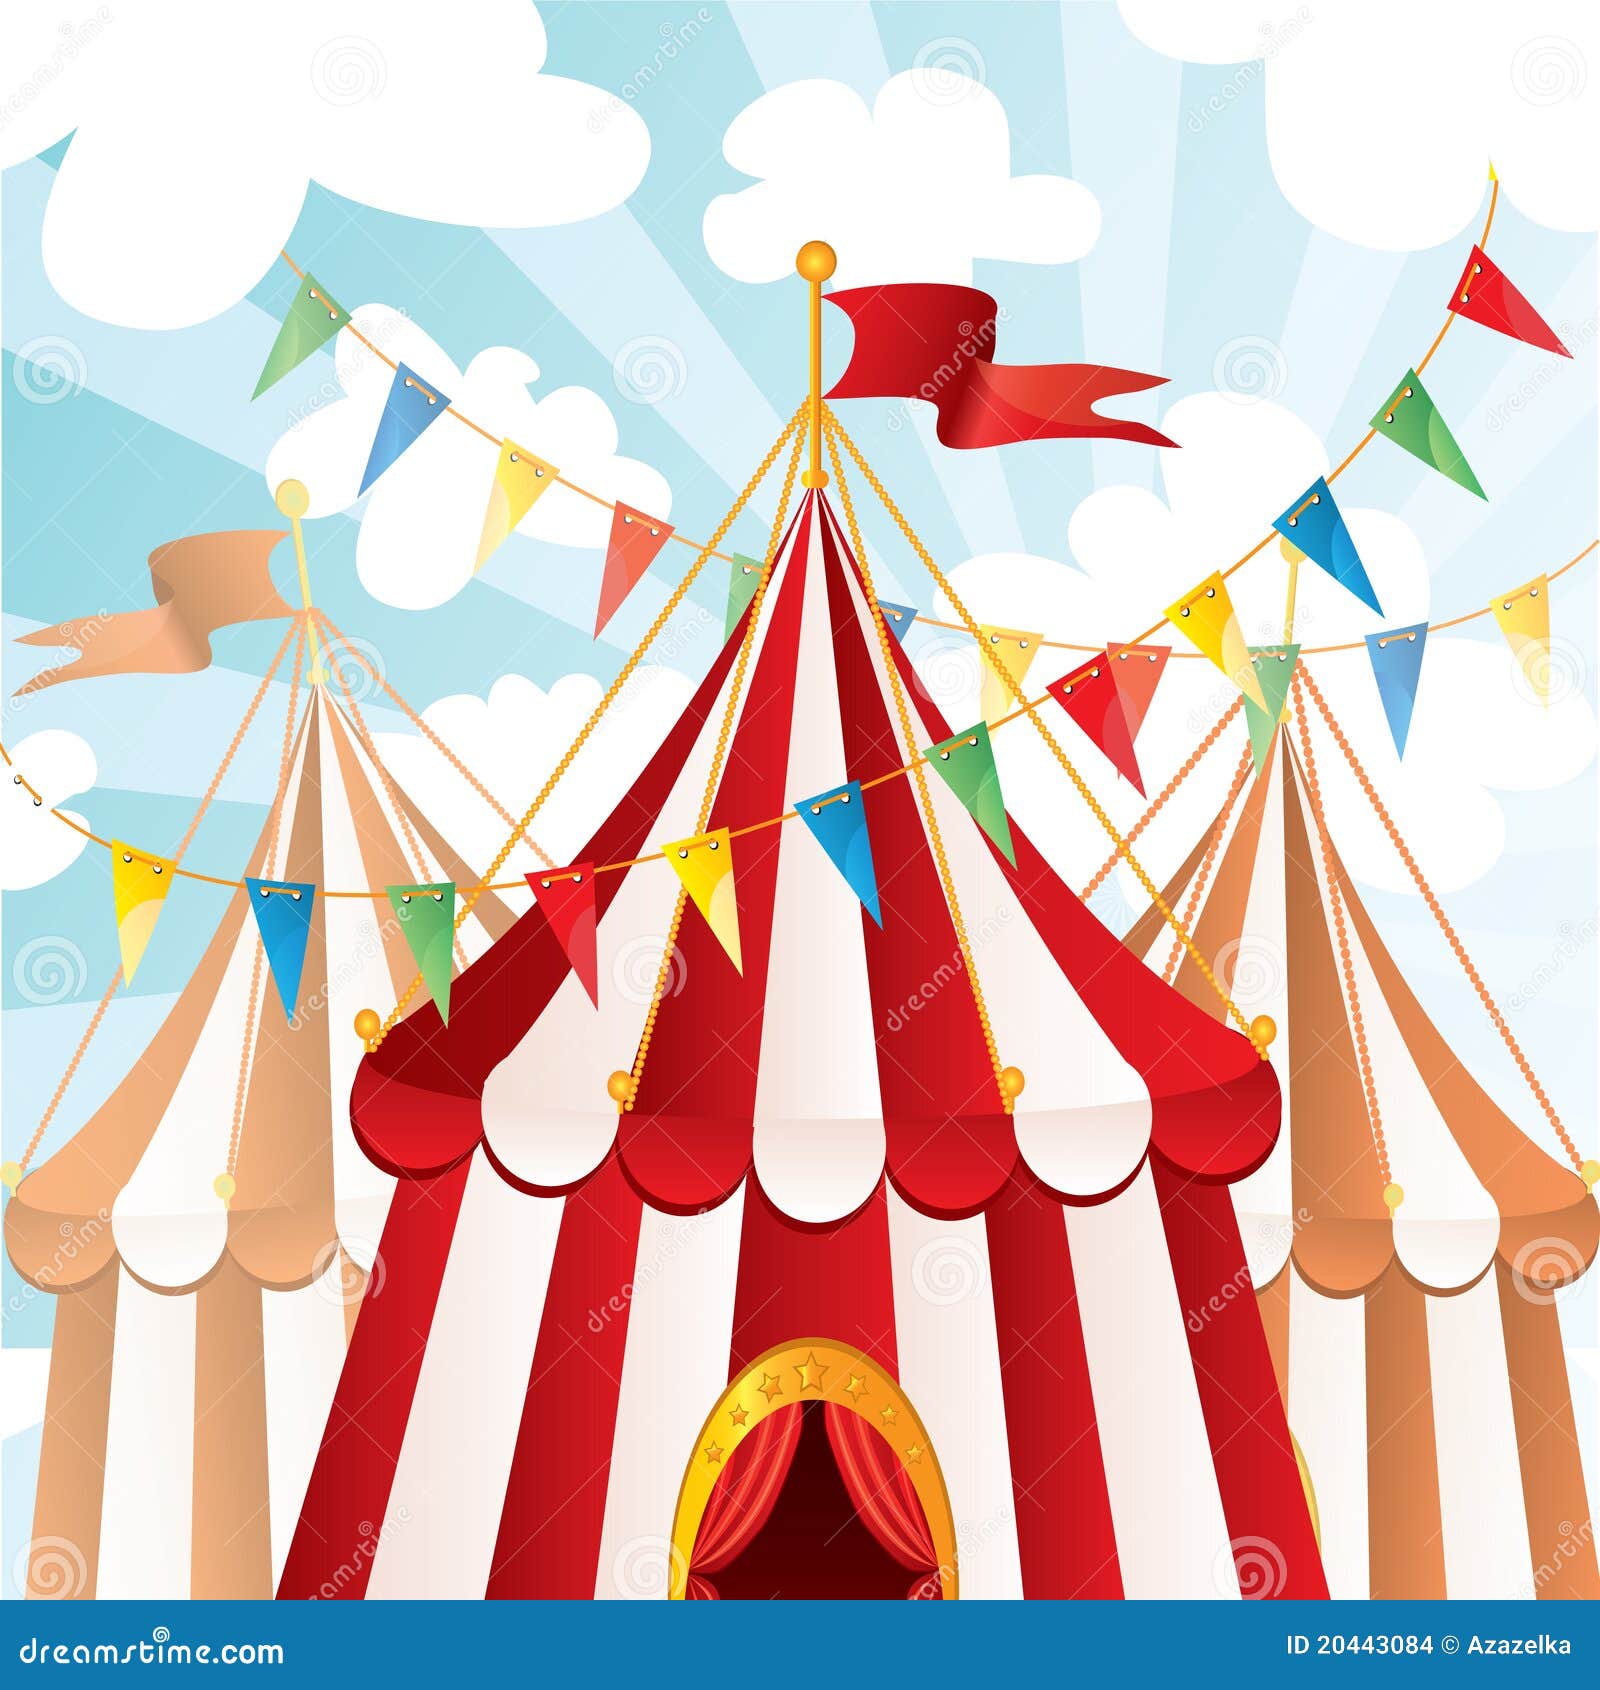 Circus background stock vector. Illustration of retro - 20443084